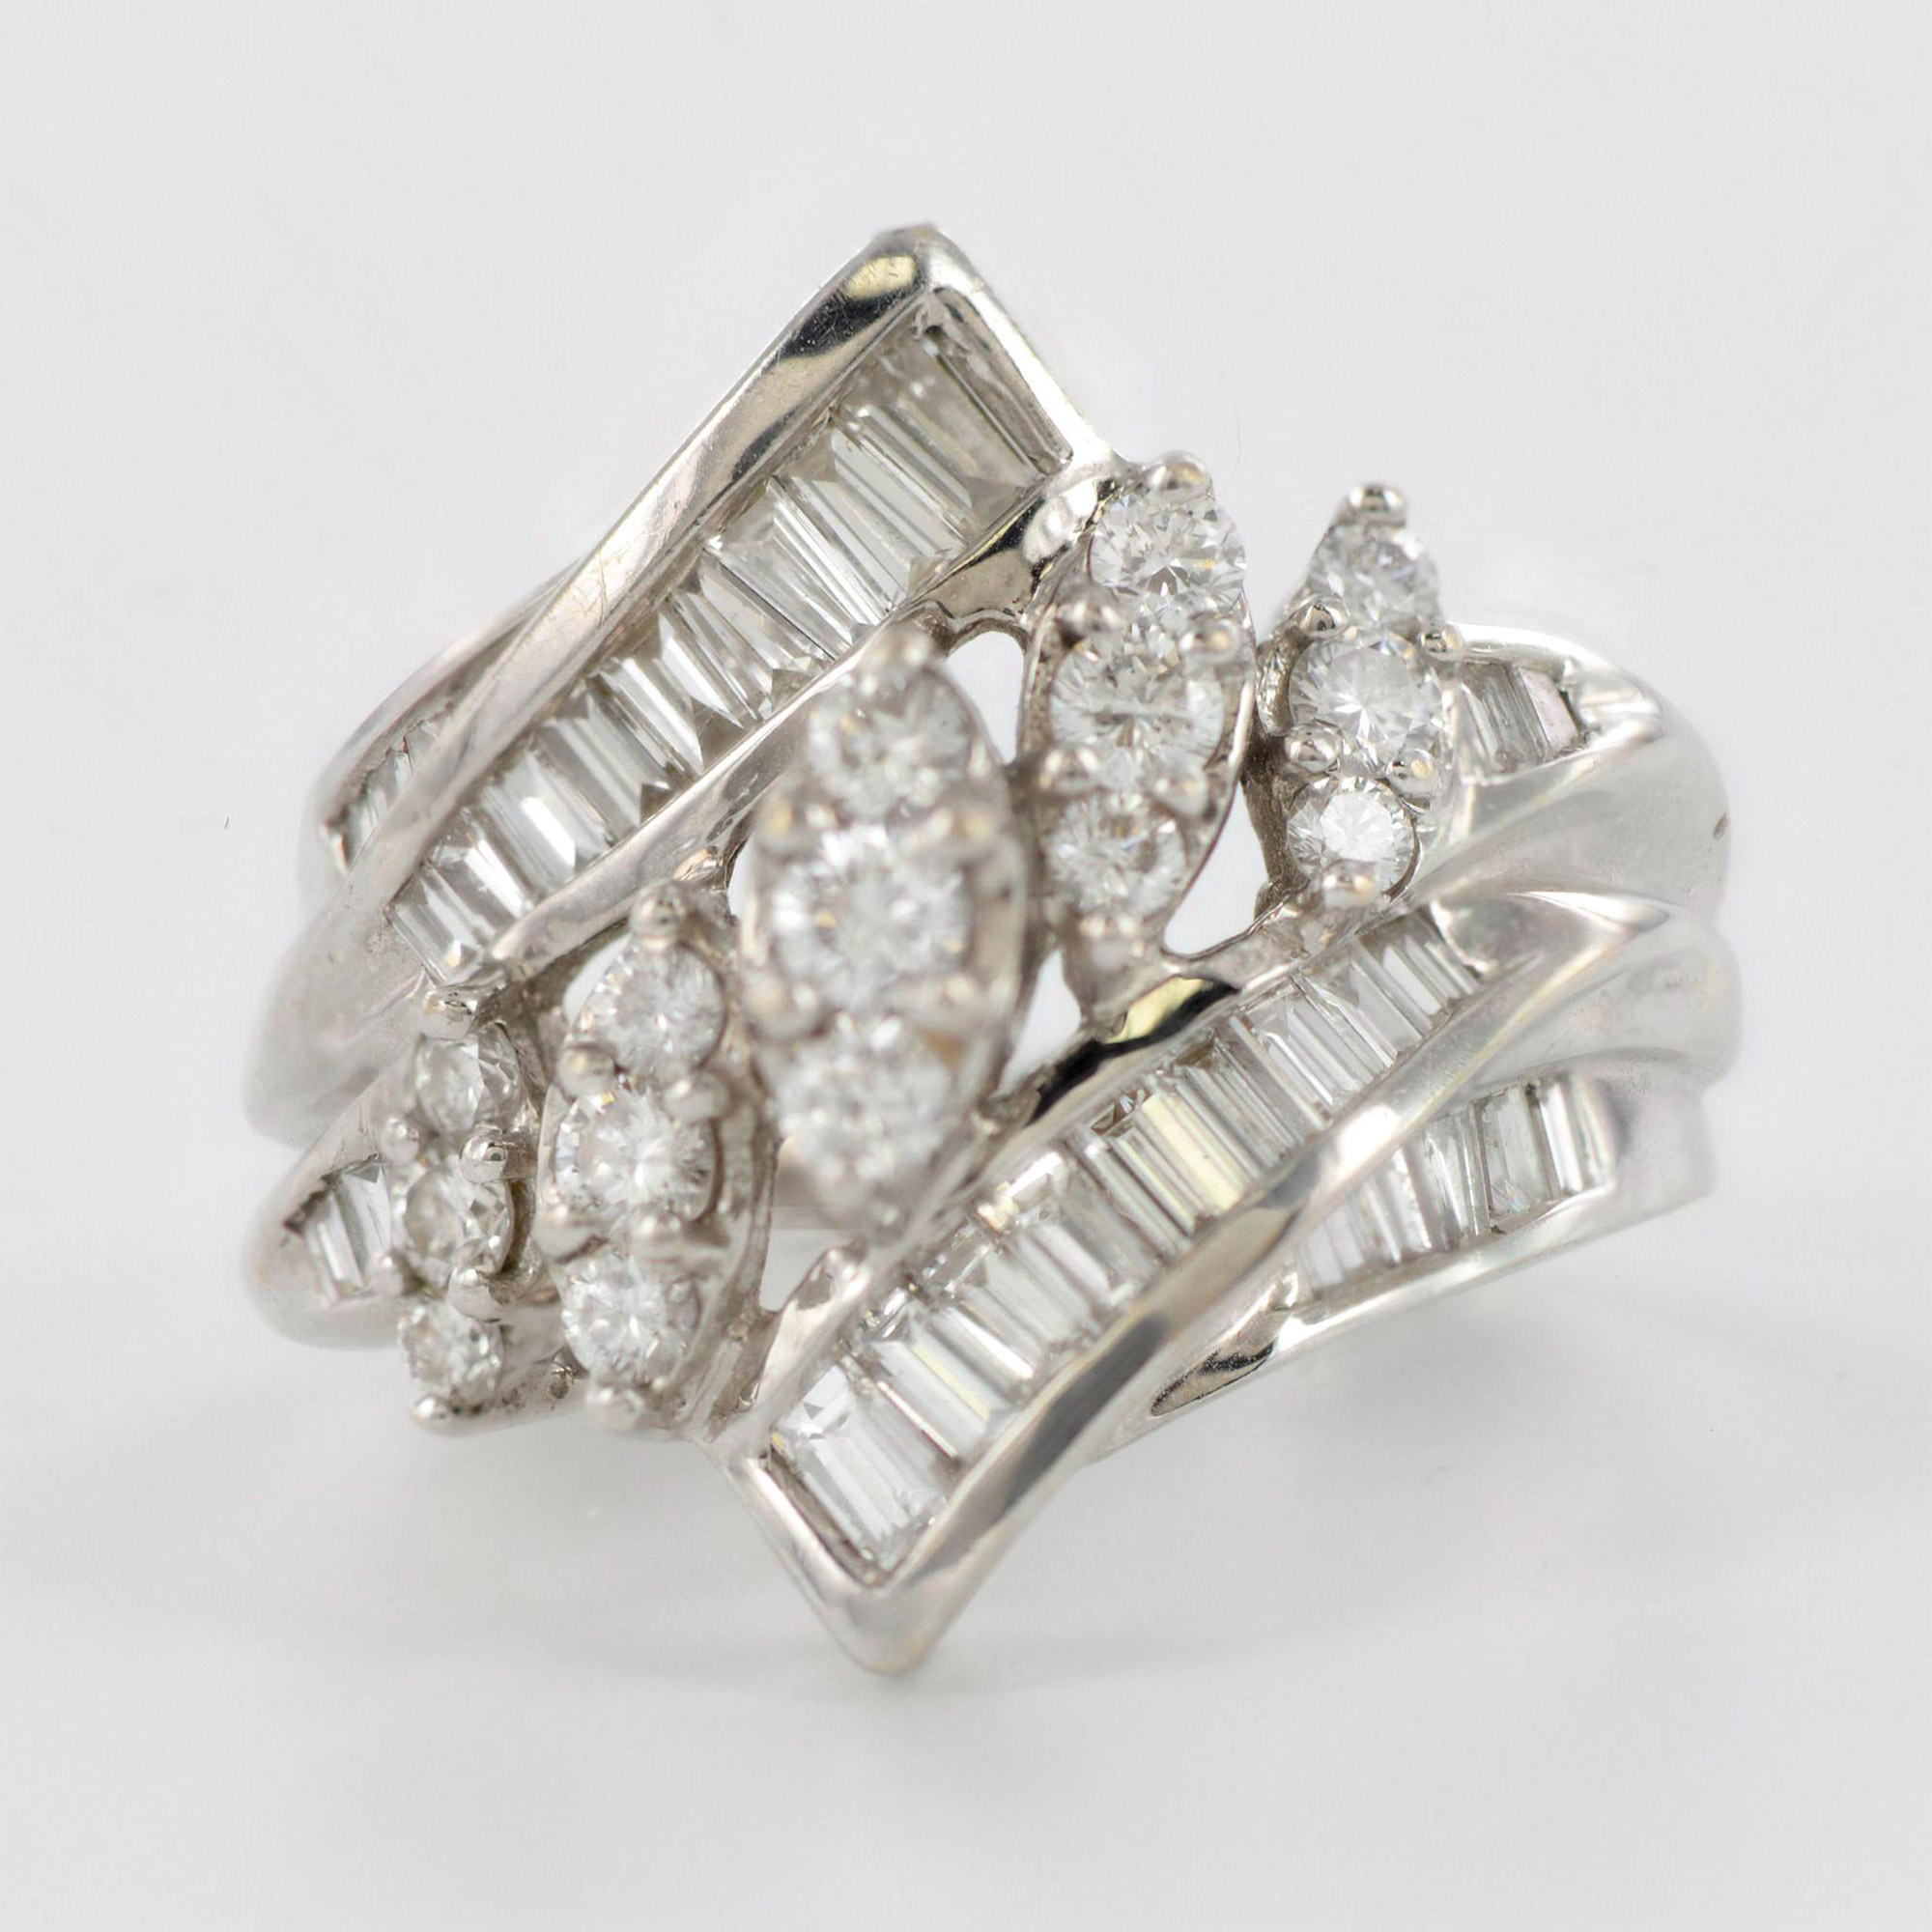 Stunning 18K White Gold and 1.75CTW Diamond Ring - Image 2 of 4